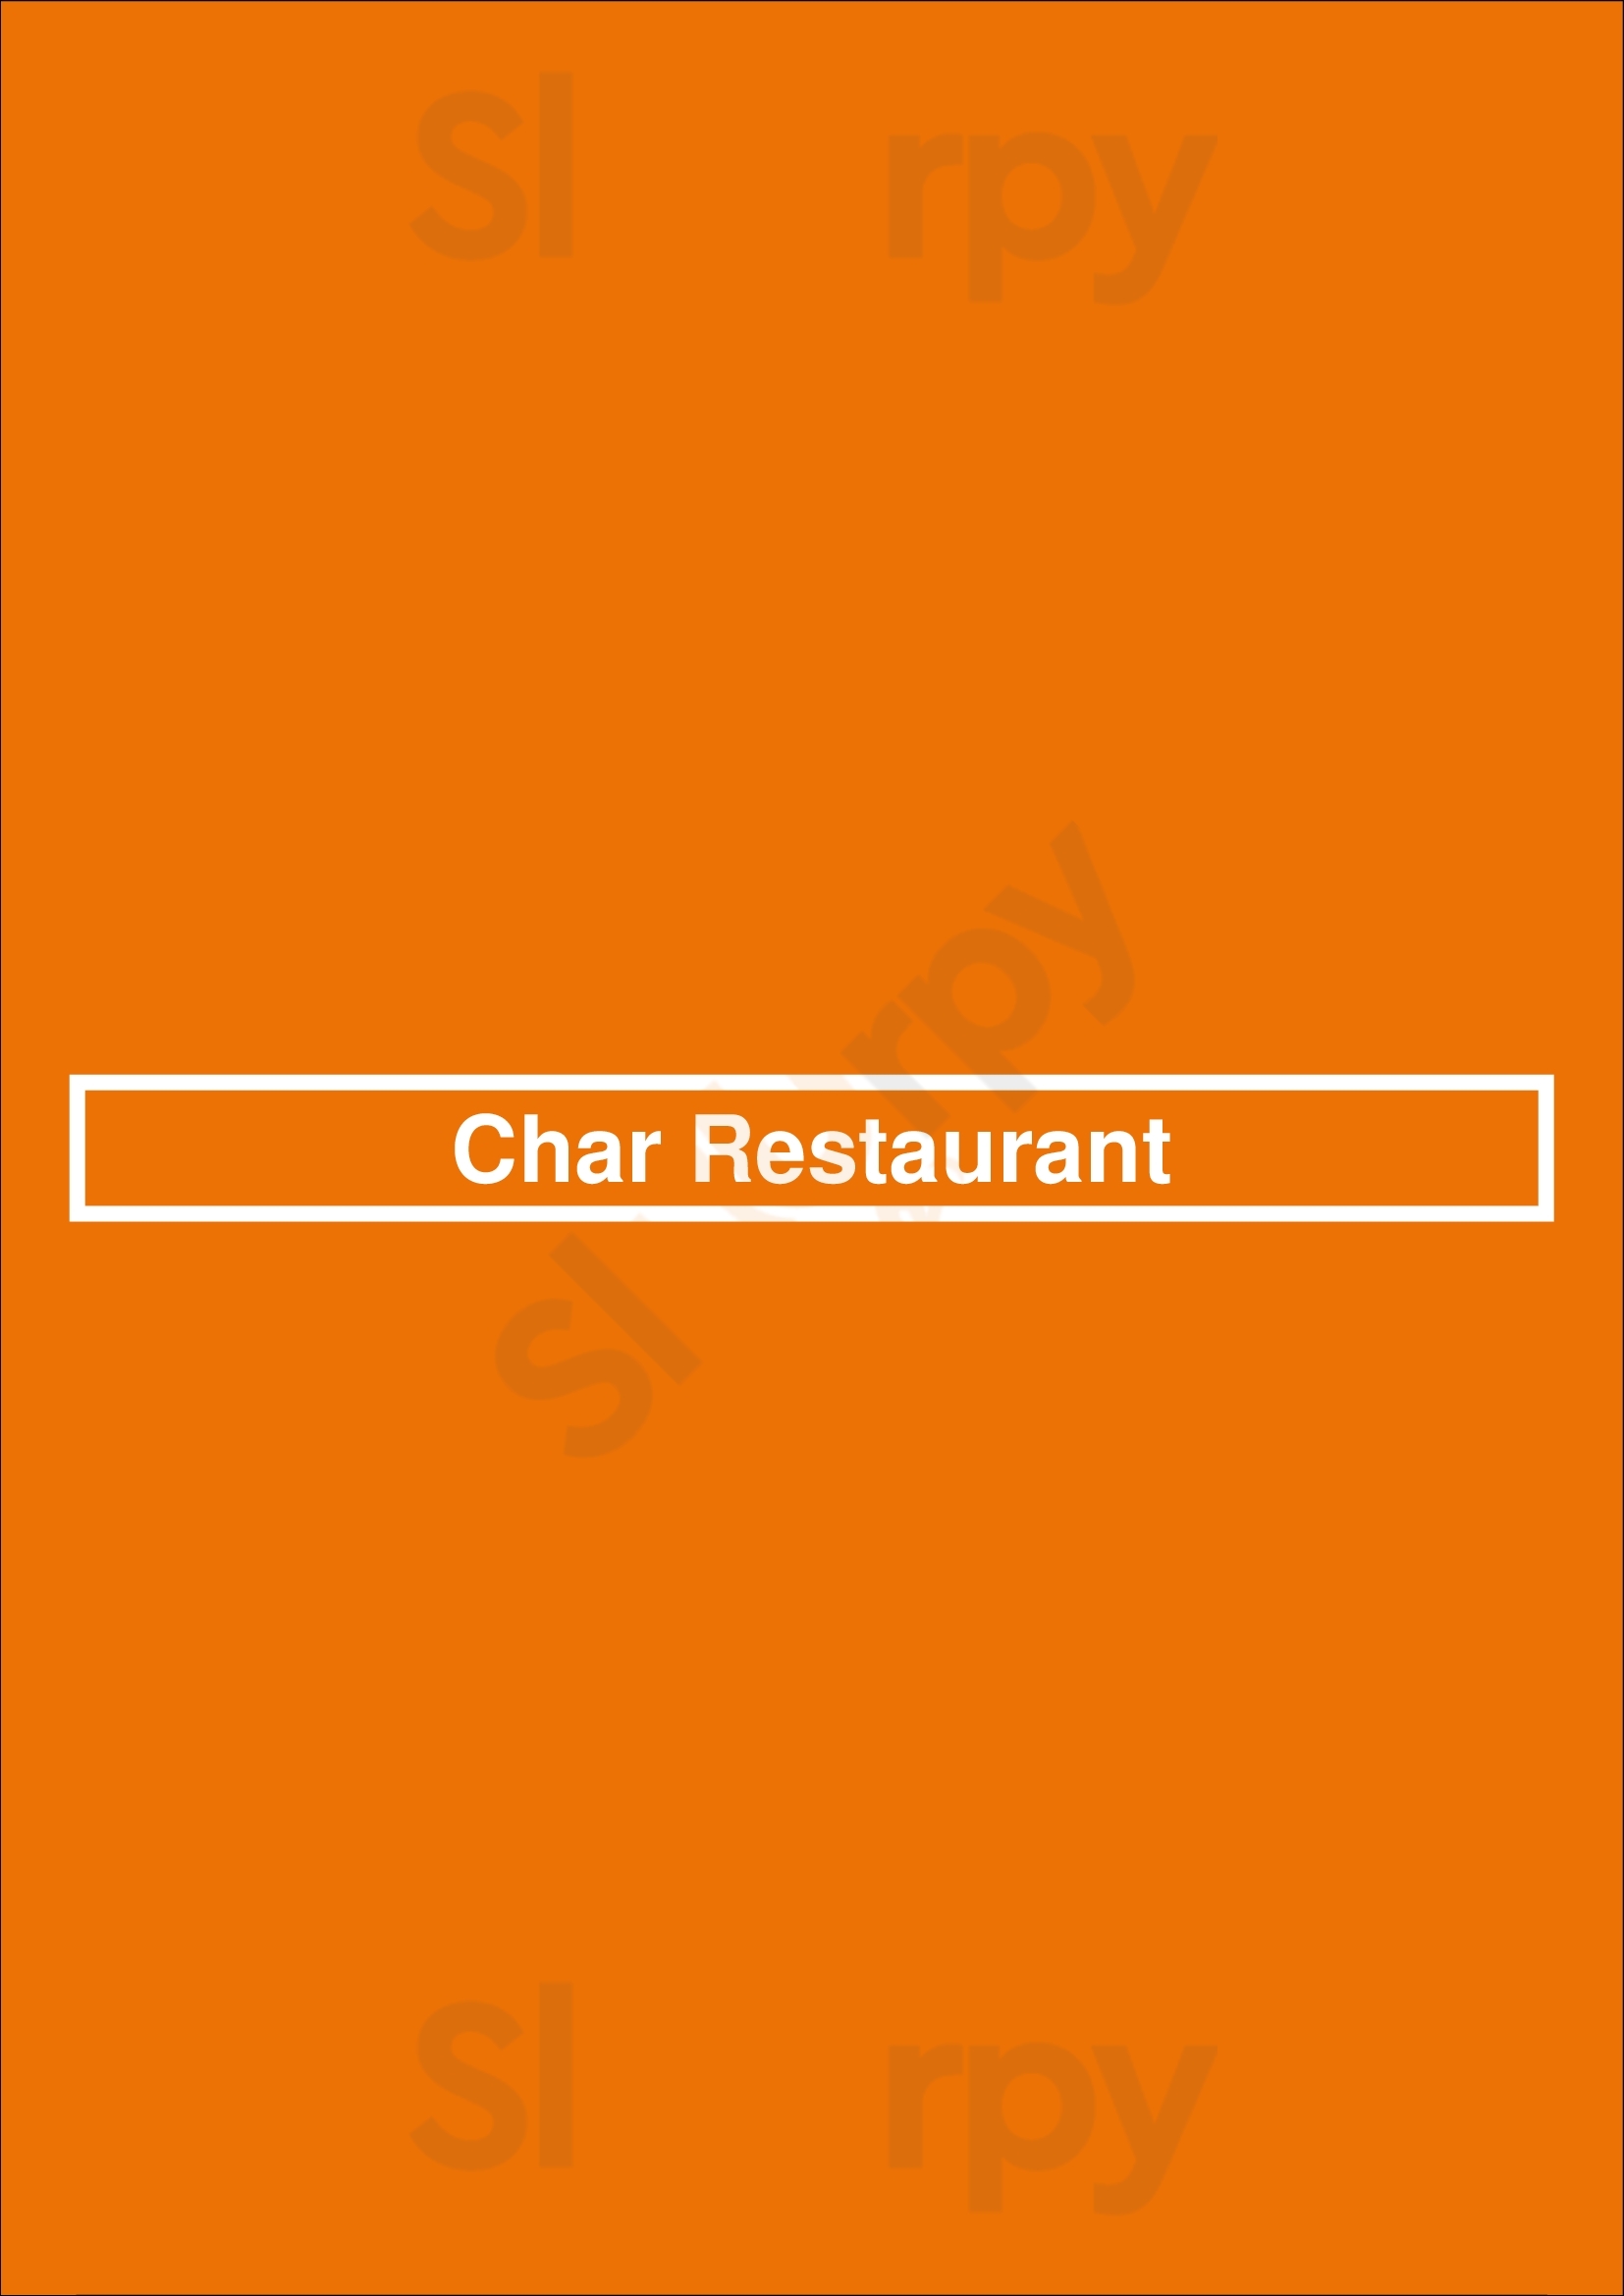 Char Restaurant Nashville Menu - 1